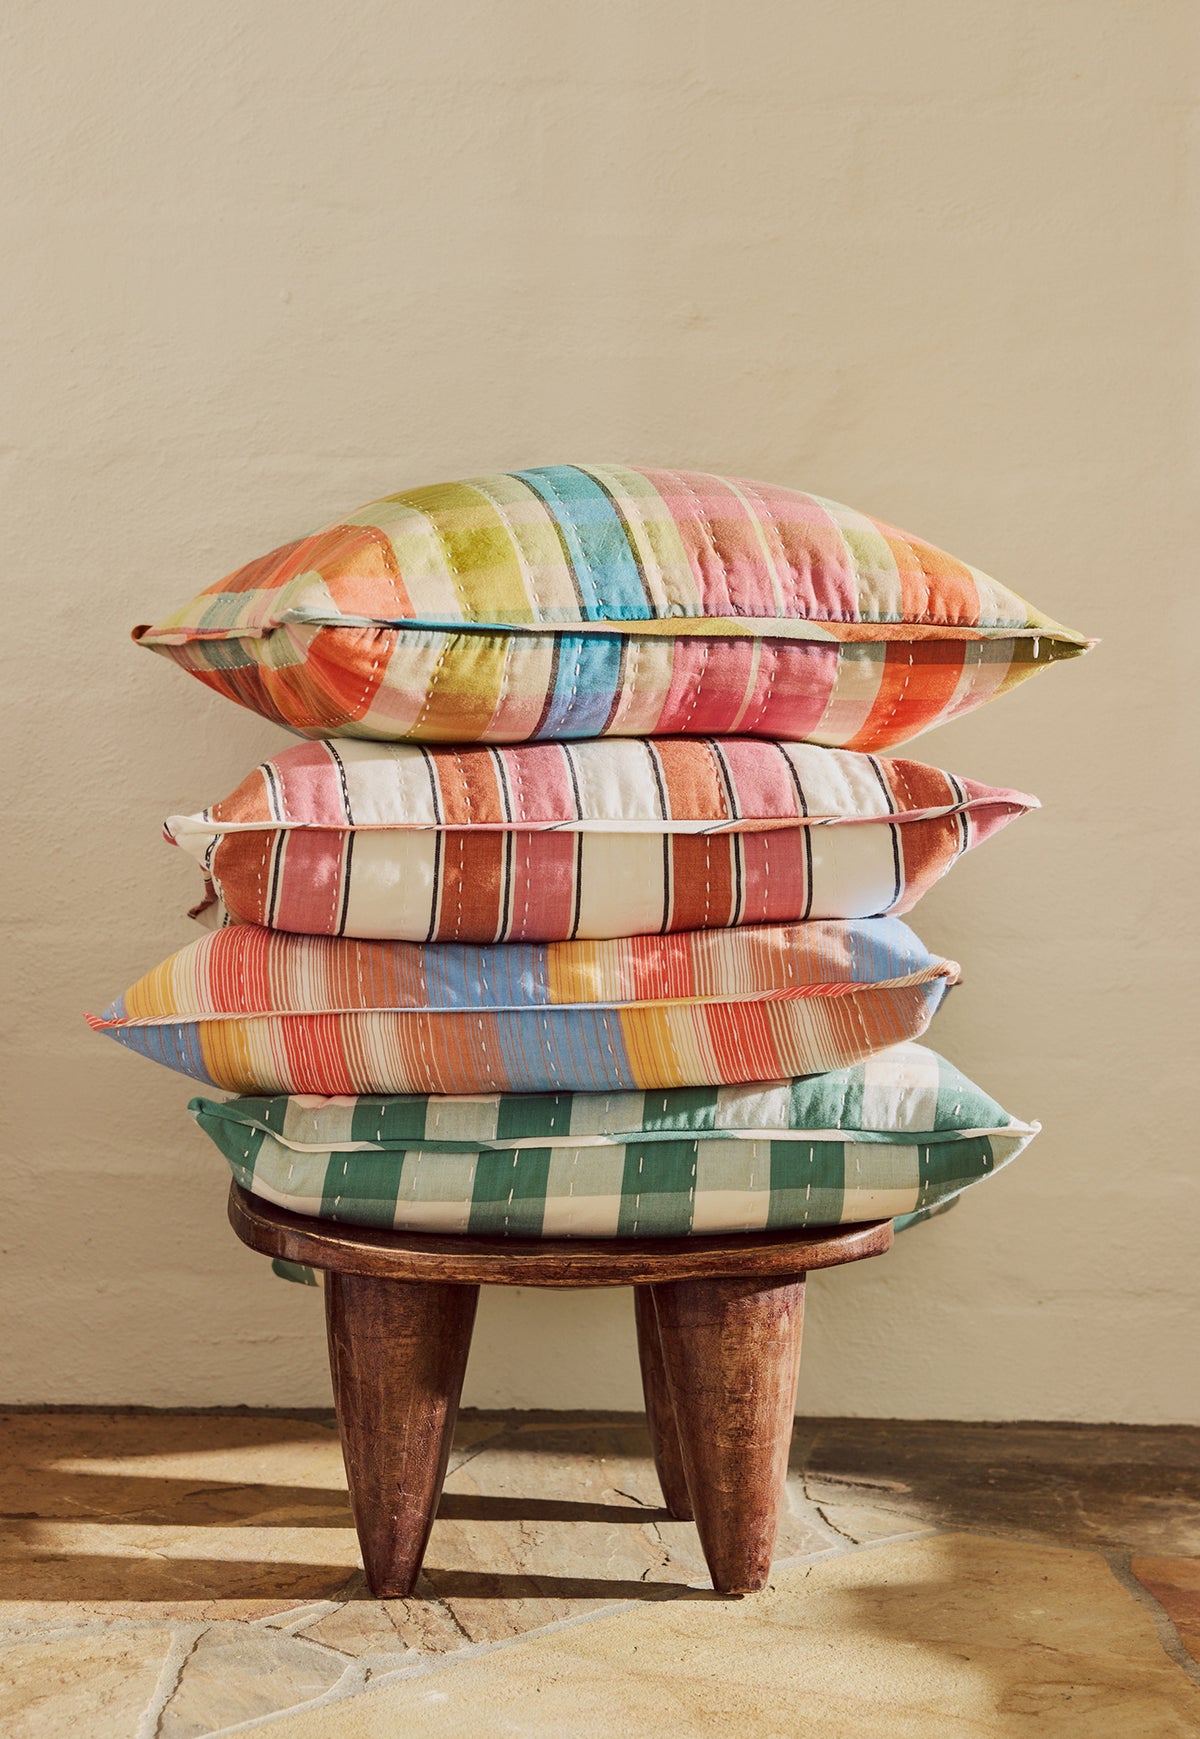 Handwoven Cotton Kantha Cushion Cover - Gelato Stripe